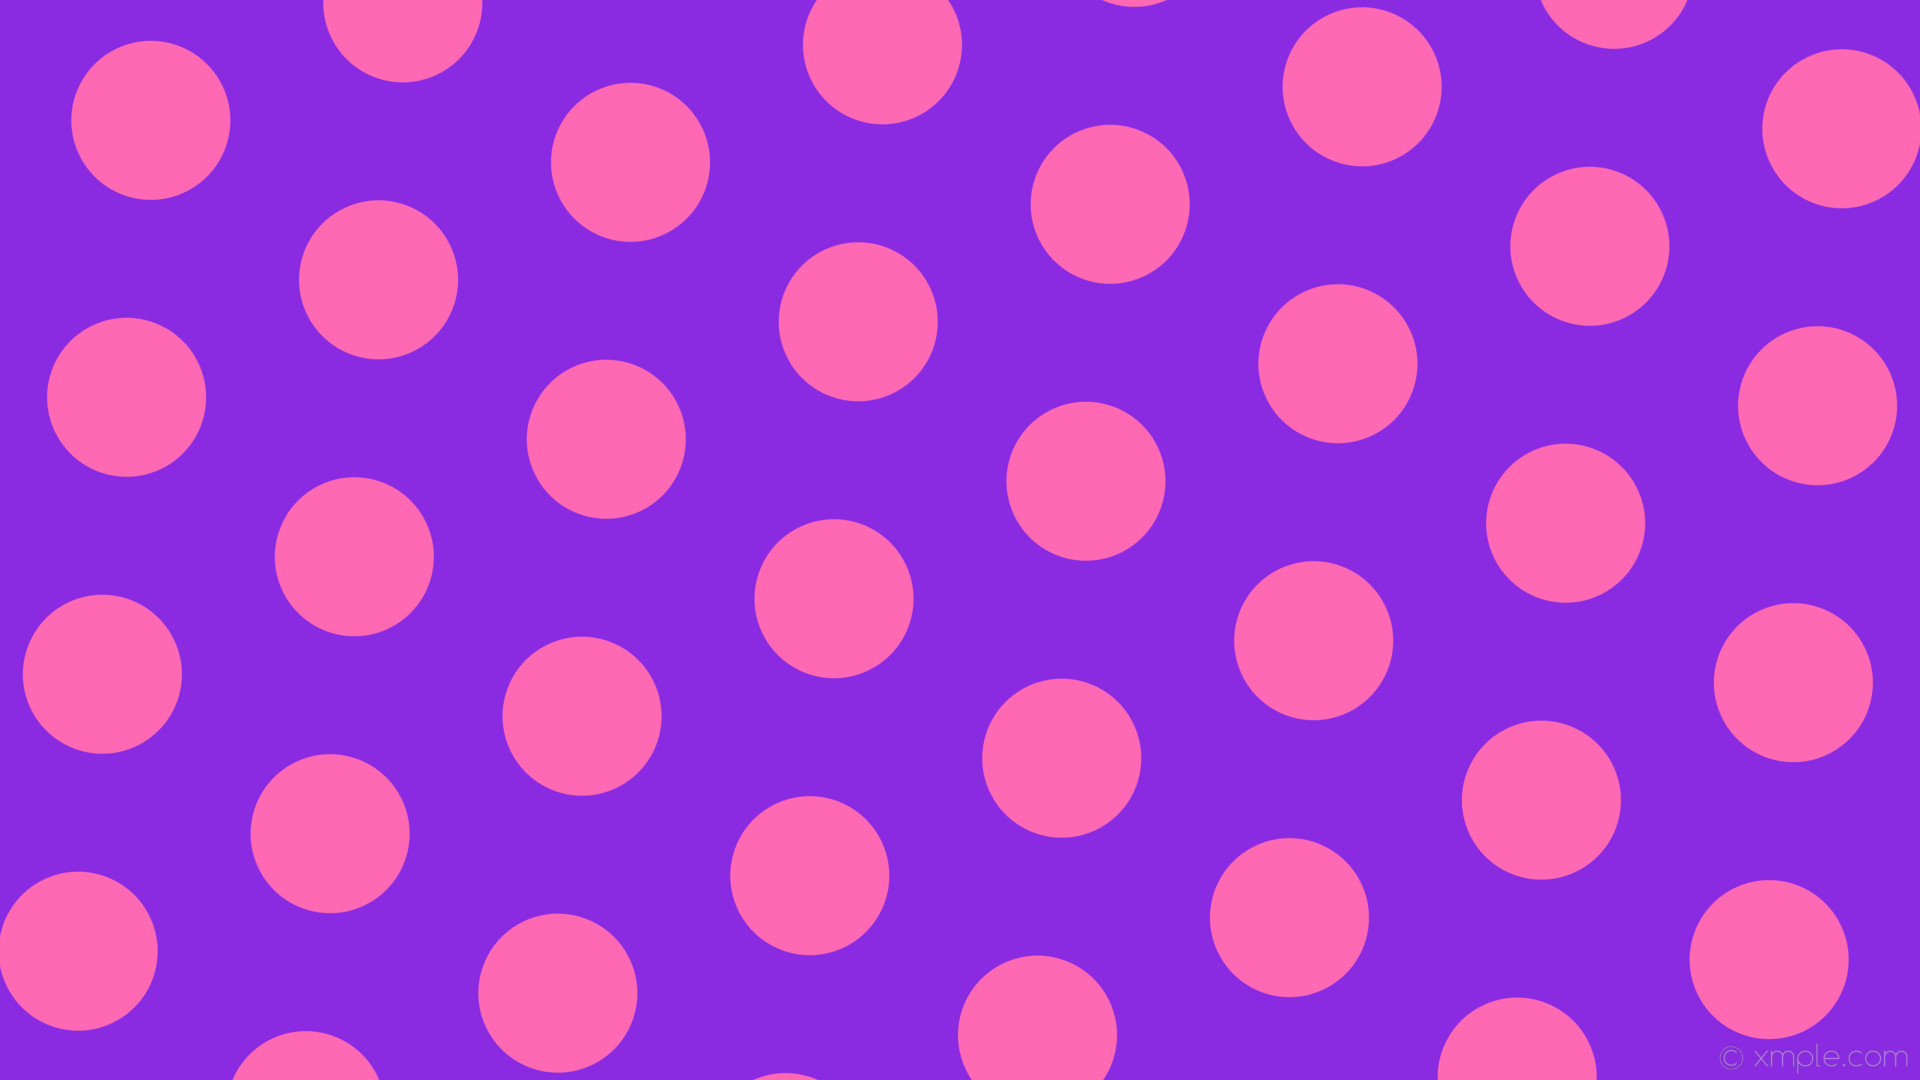 Wallpaper hexagon polka pink purple dots blue violet hot pink a2be2 #ff69b4 diagonal 25